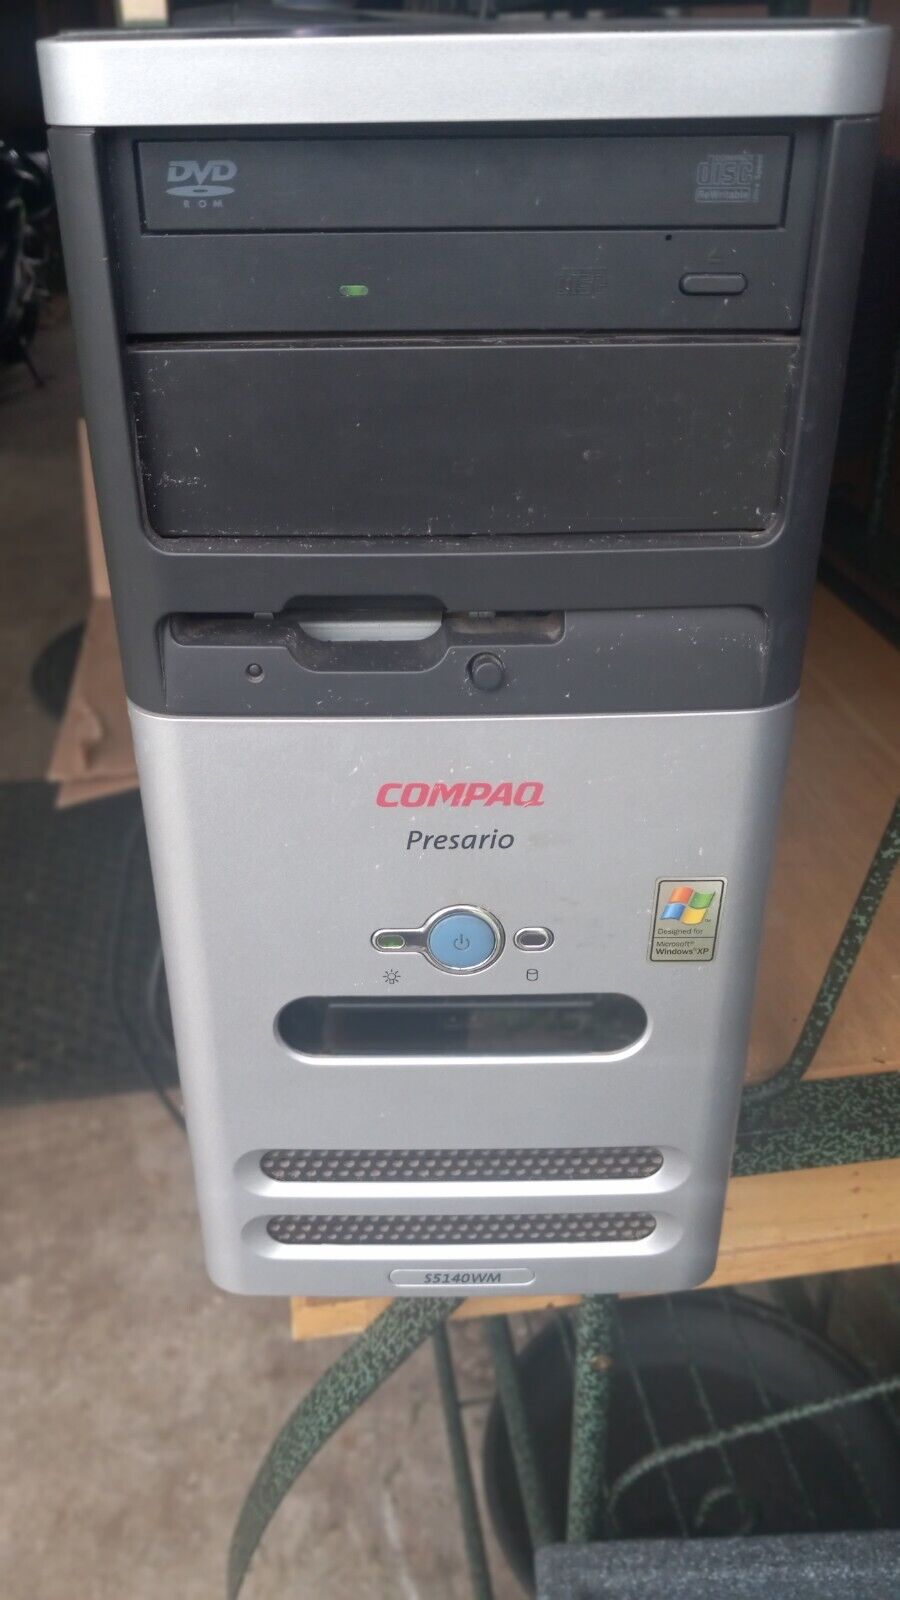 Compaq Presario DM197A PC Intel 512MB RAM - NO HDD Retro Gaming